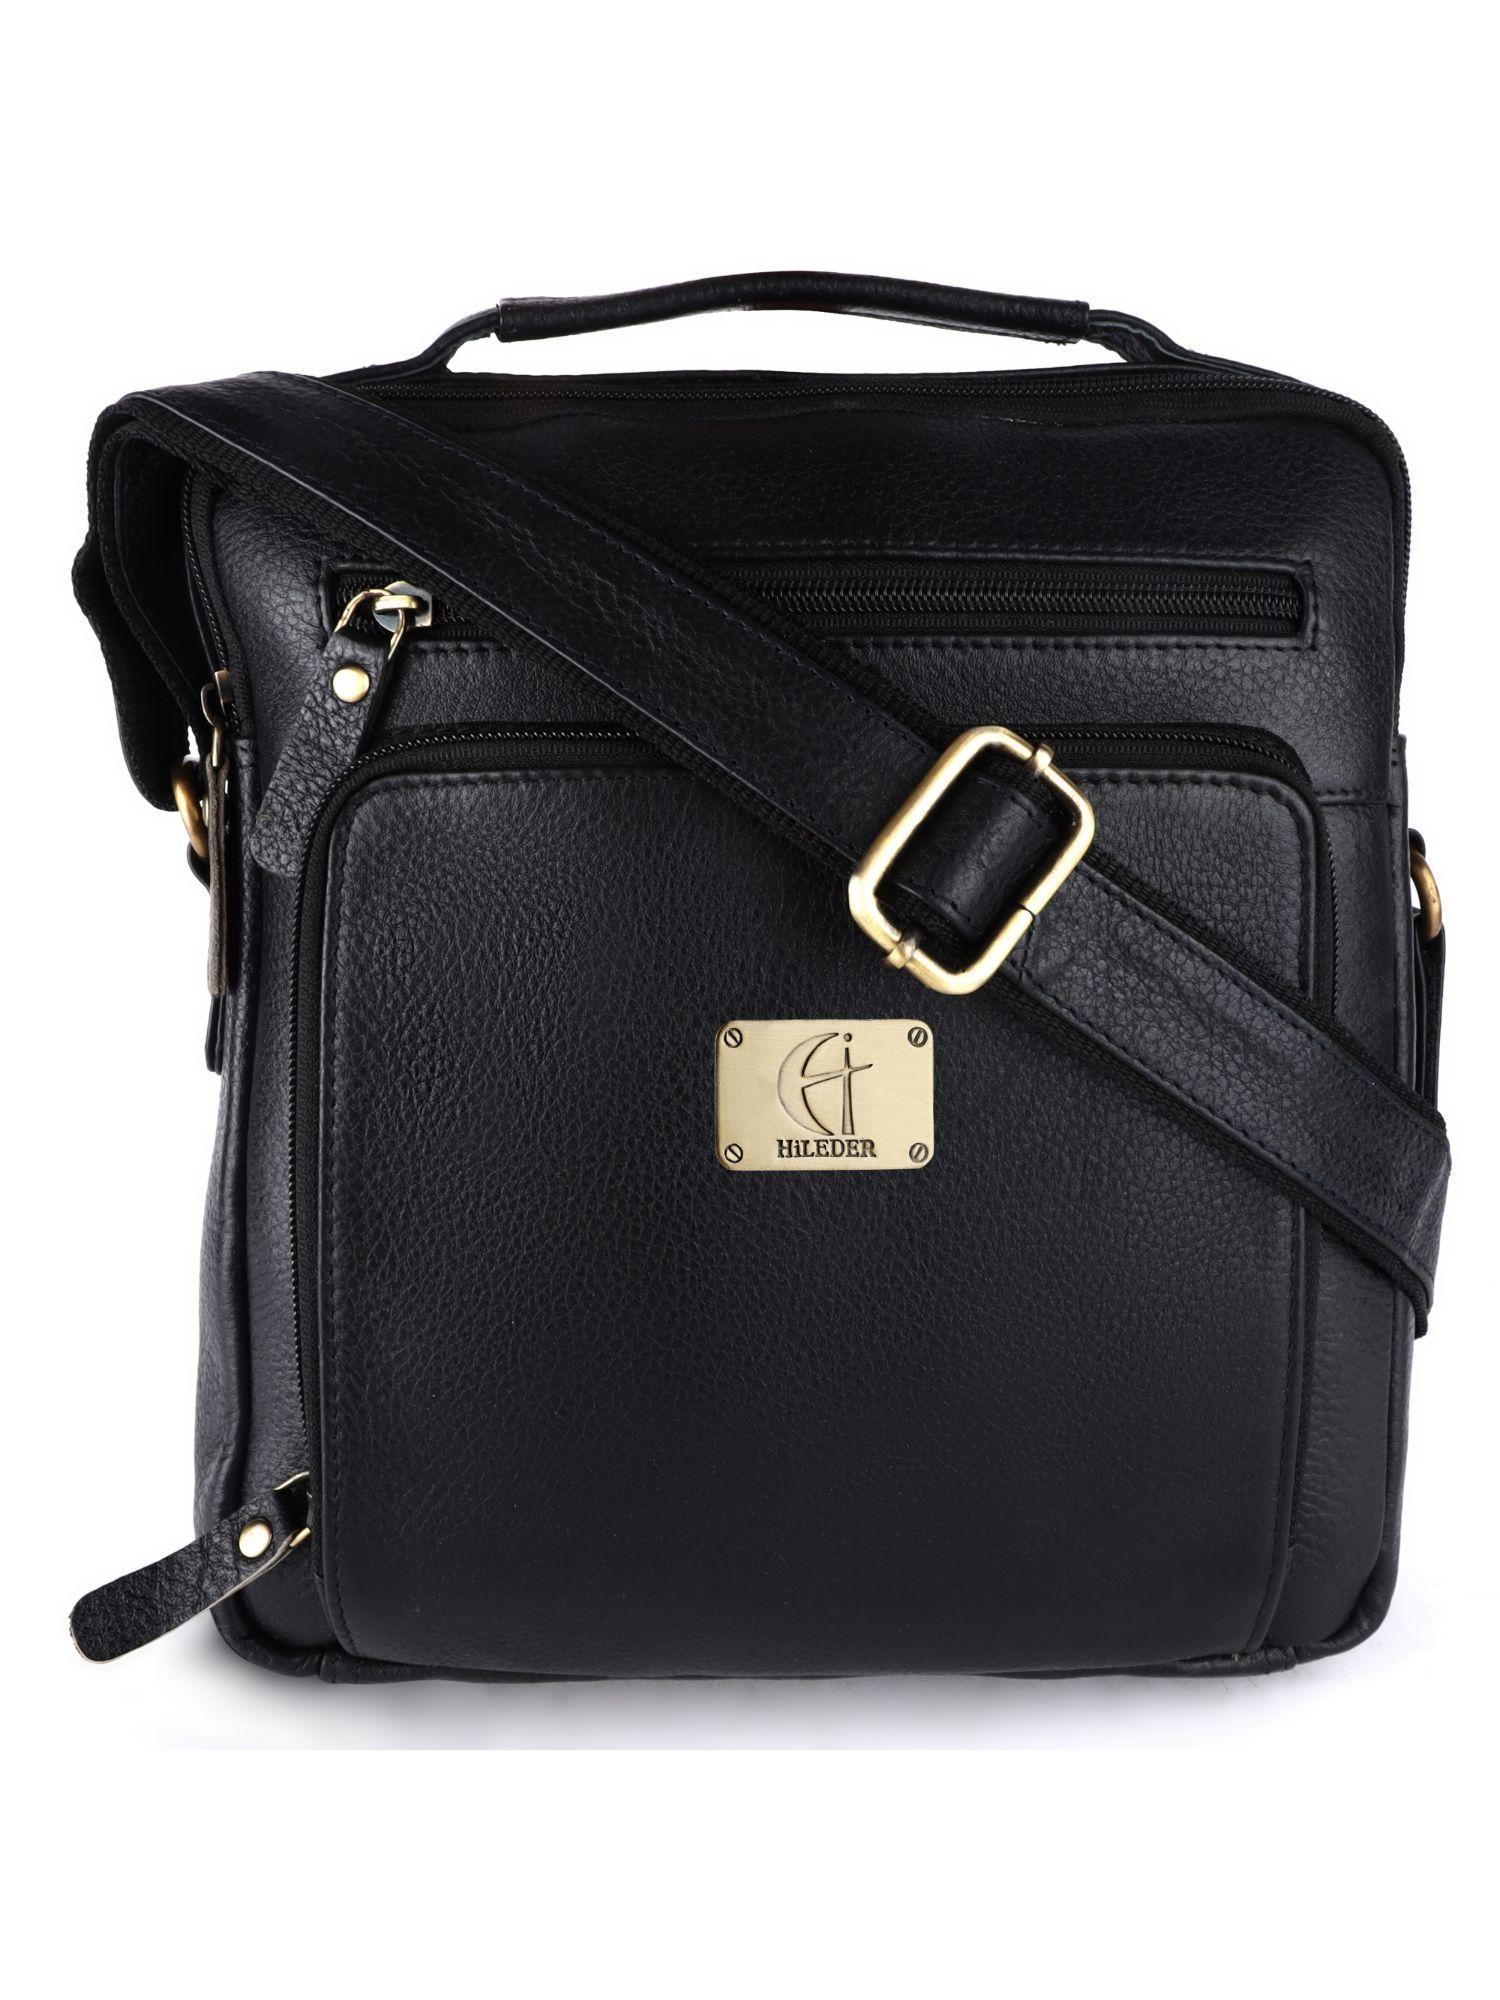 pure leather messenger unisex 10 inch sling cross body travel office bag black